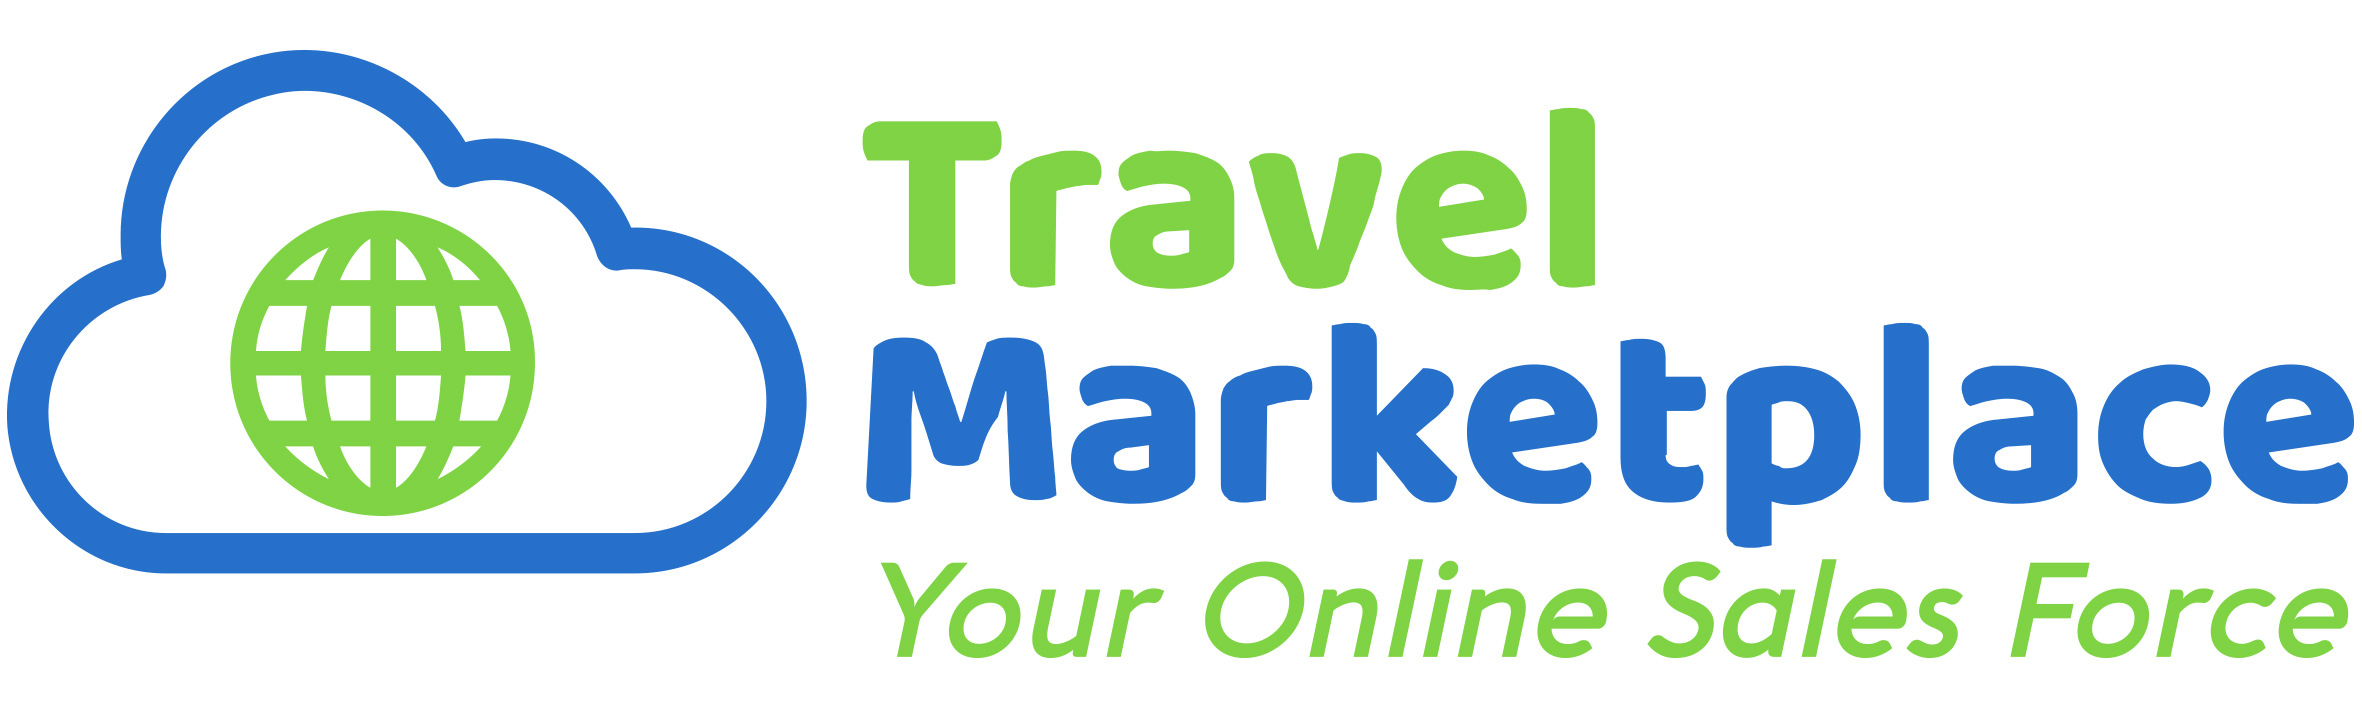 travel tours marketplace